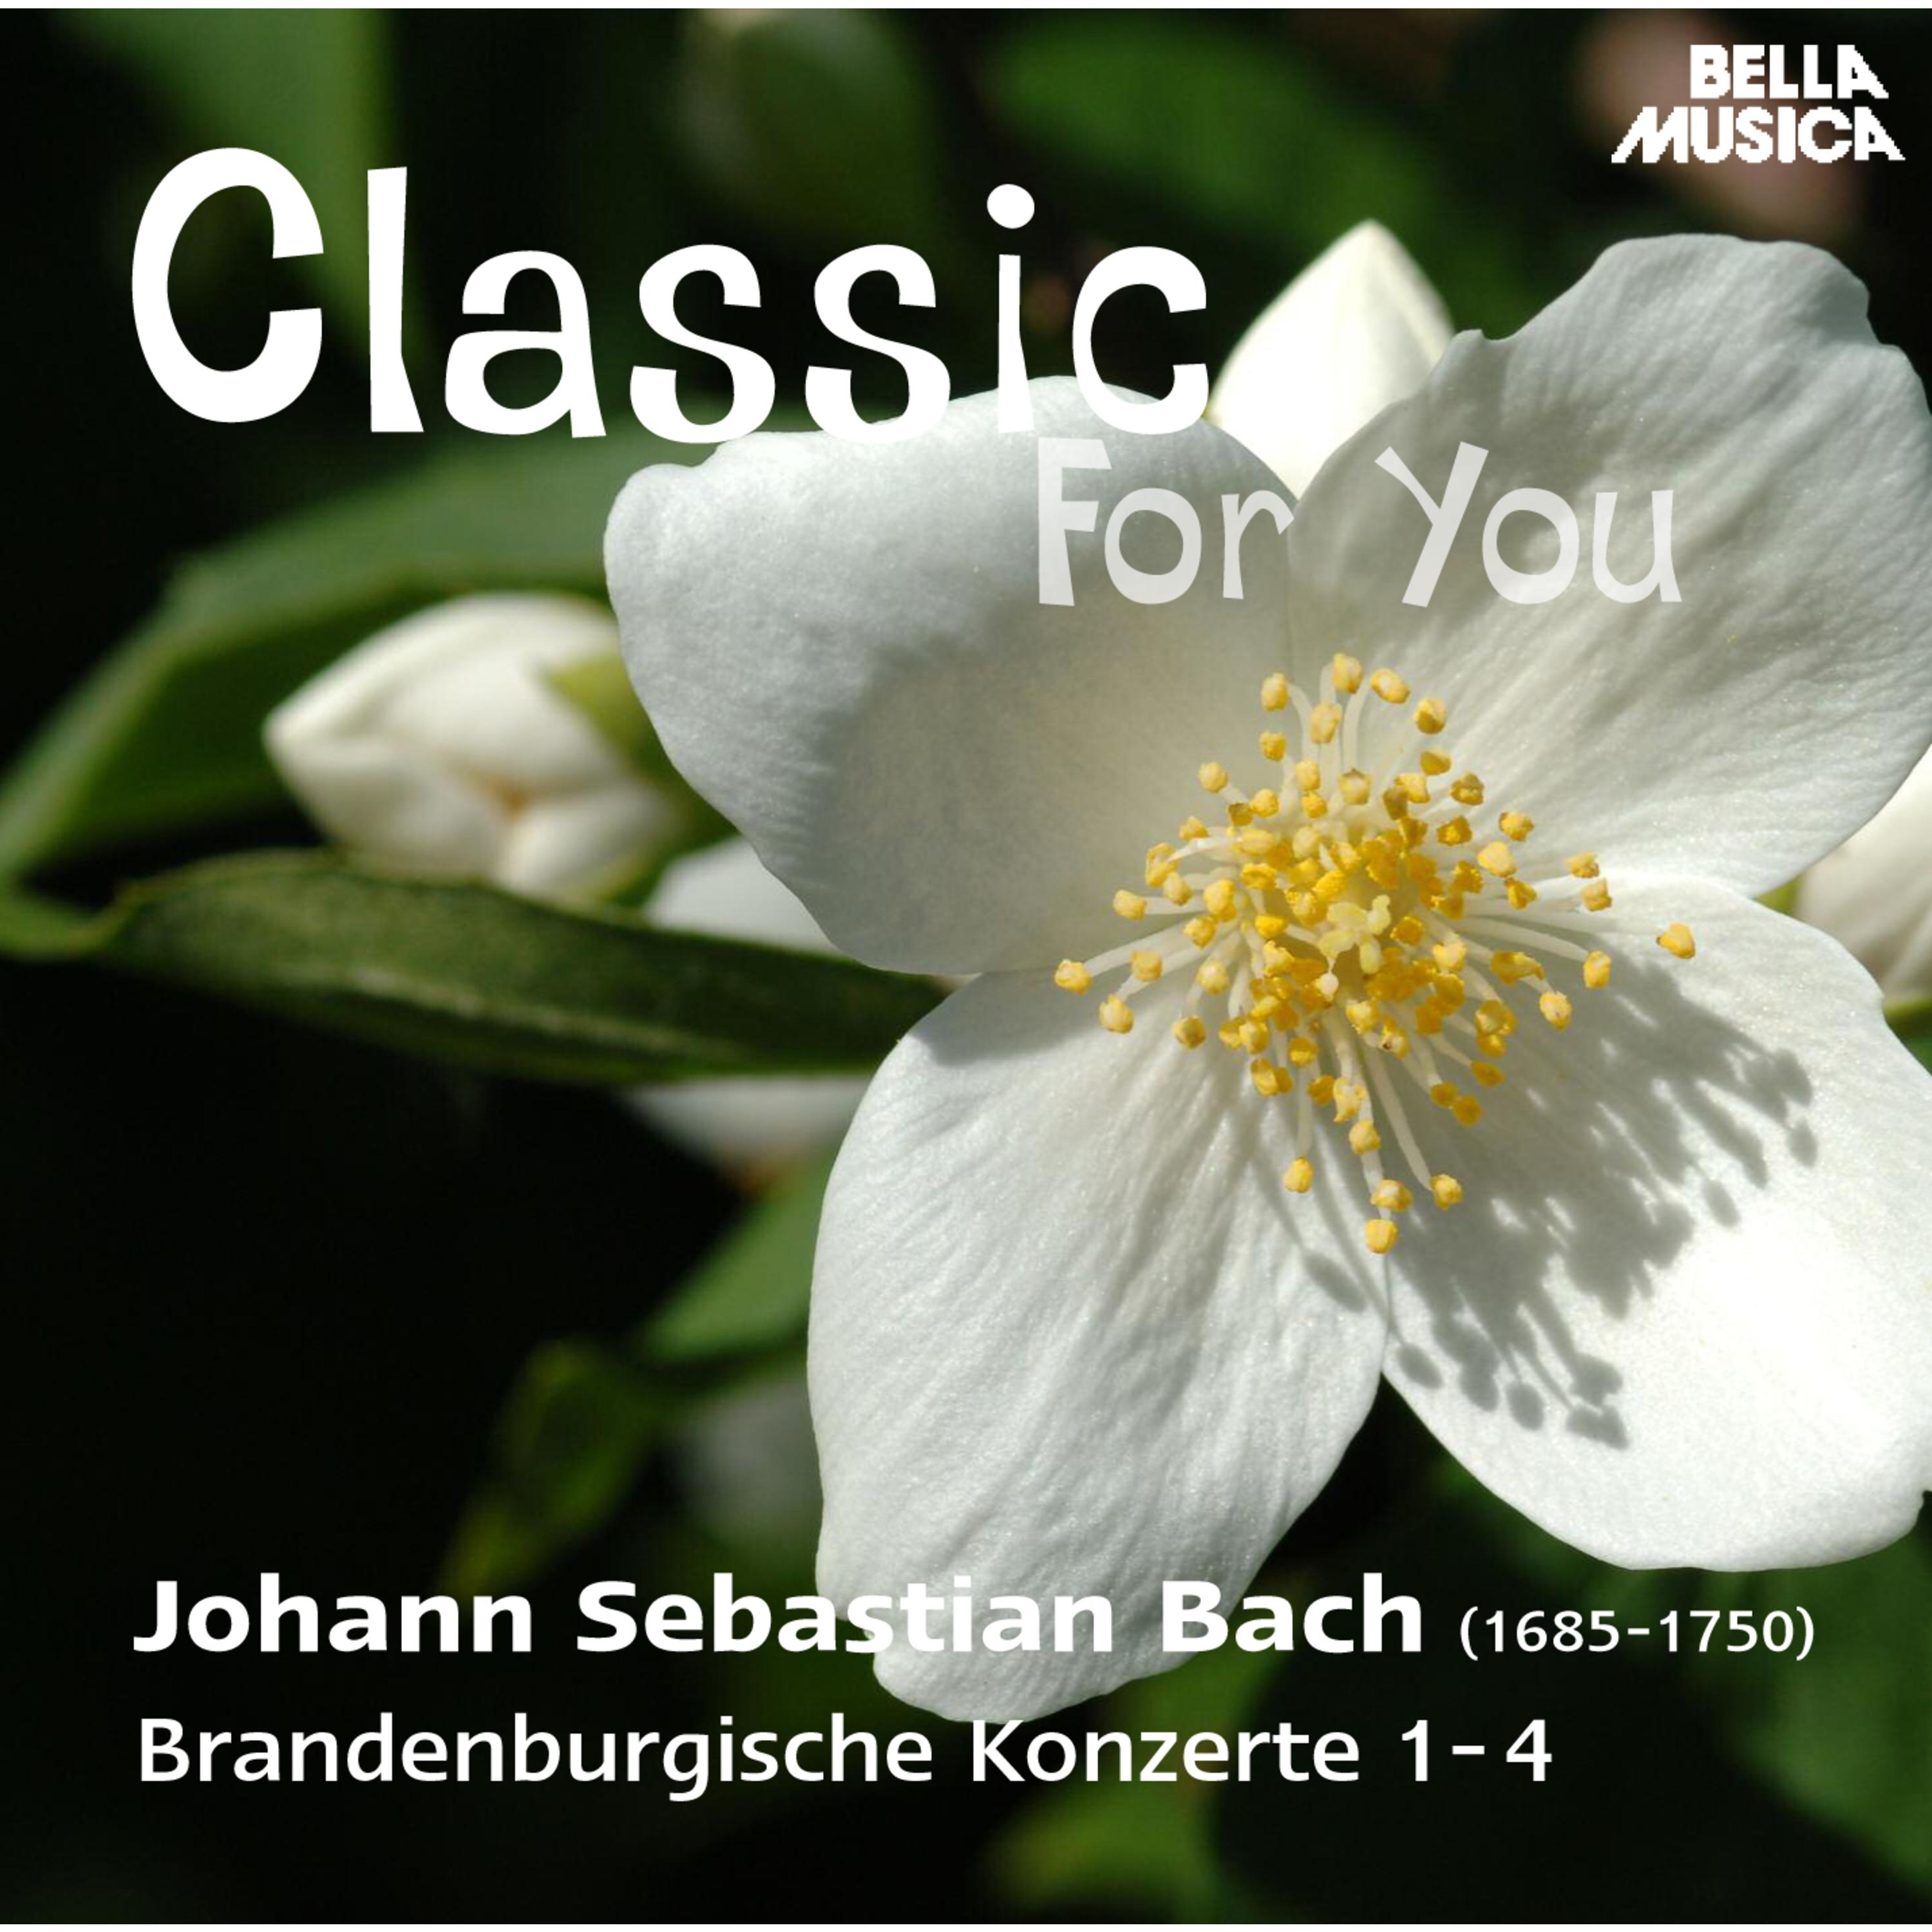 Brandenburgisches Konzert in G Major, BWV 1048, No. 3: II. Adagio